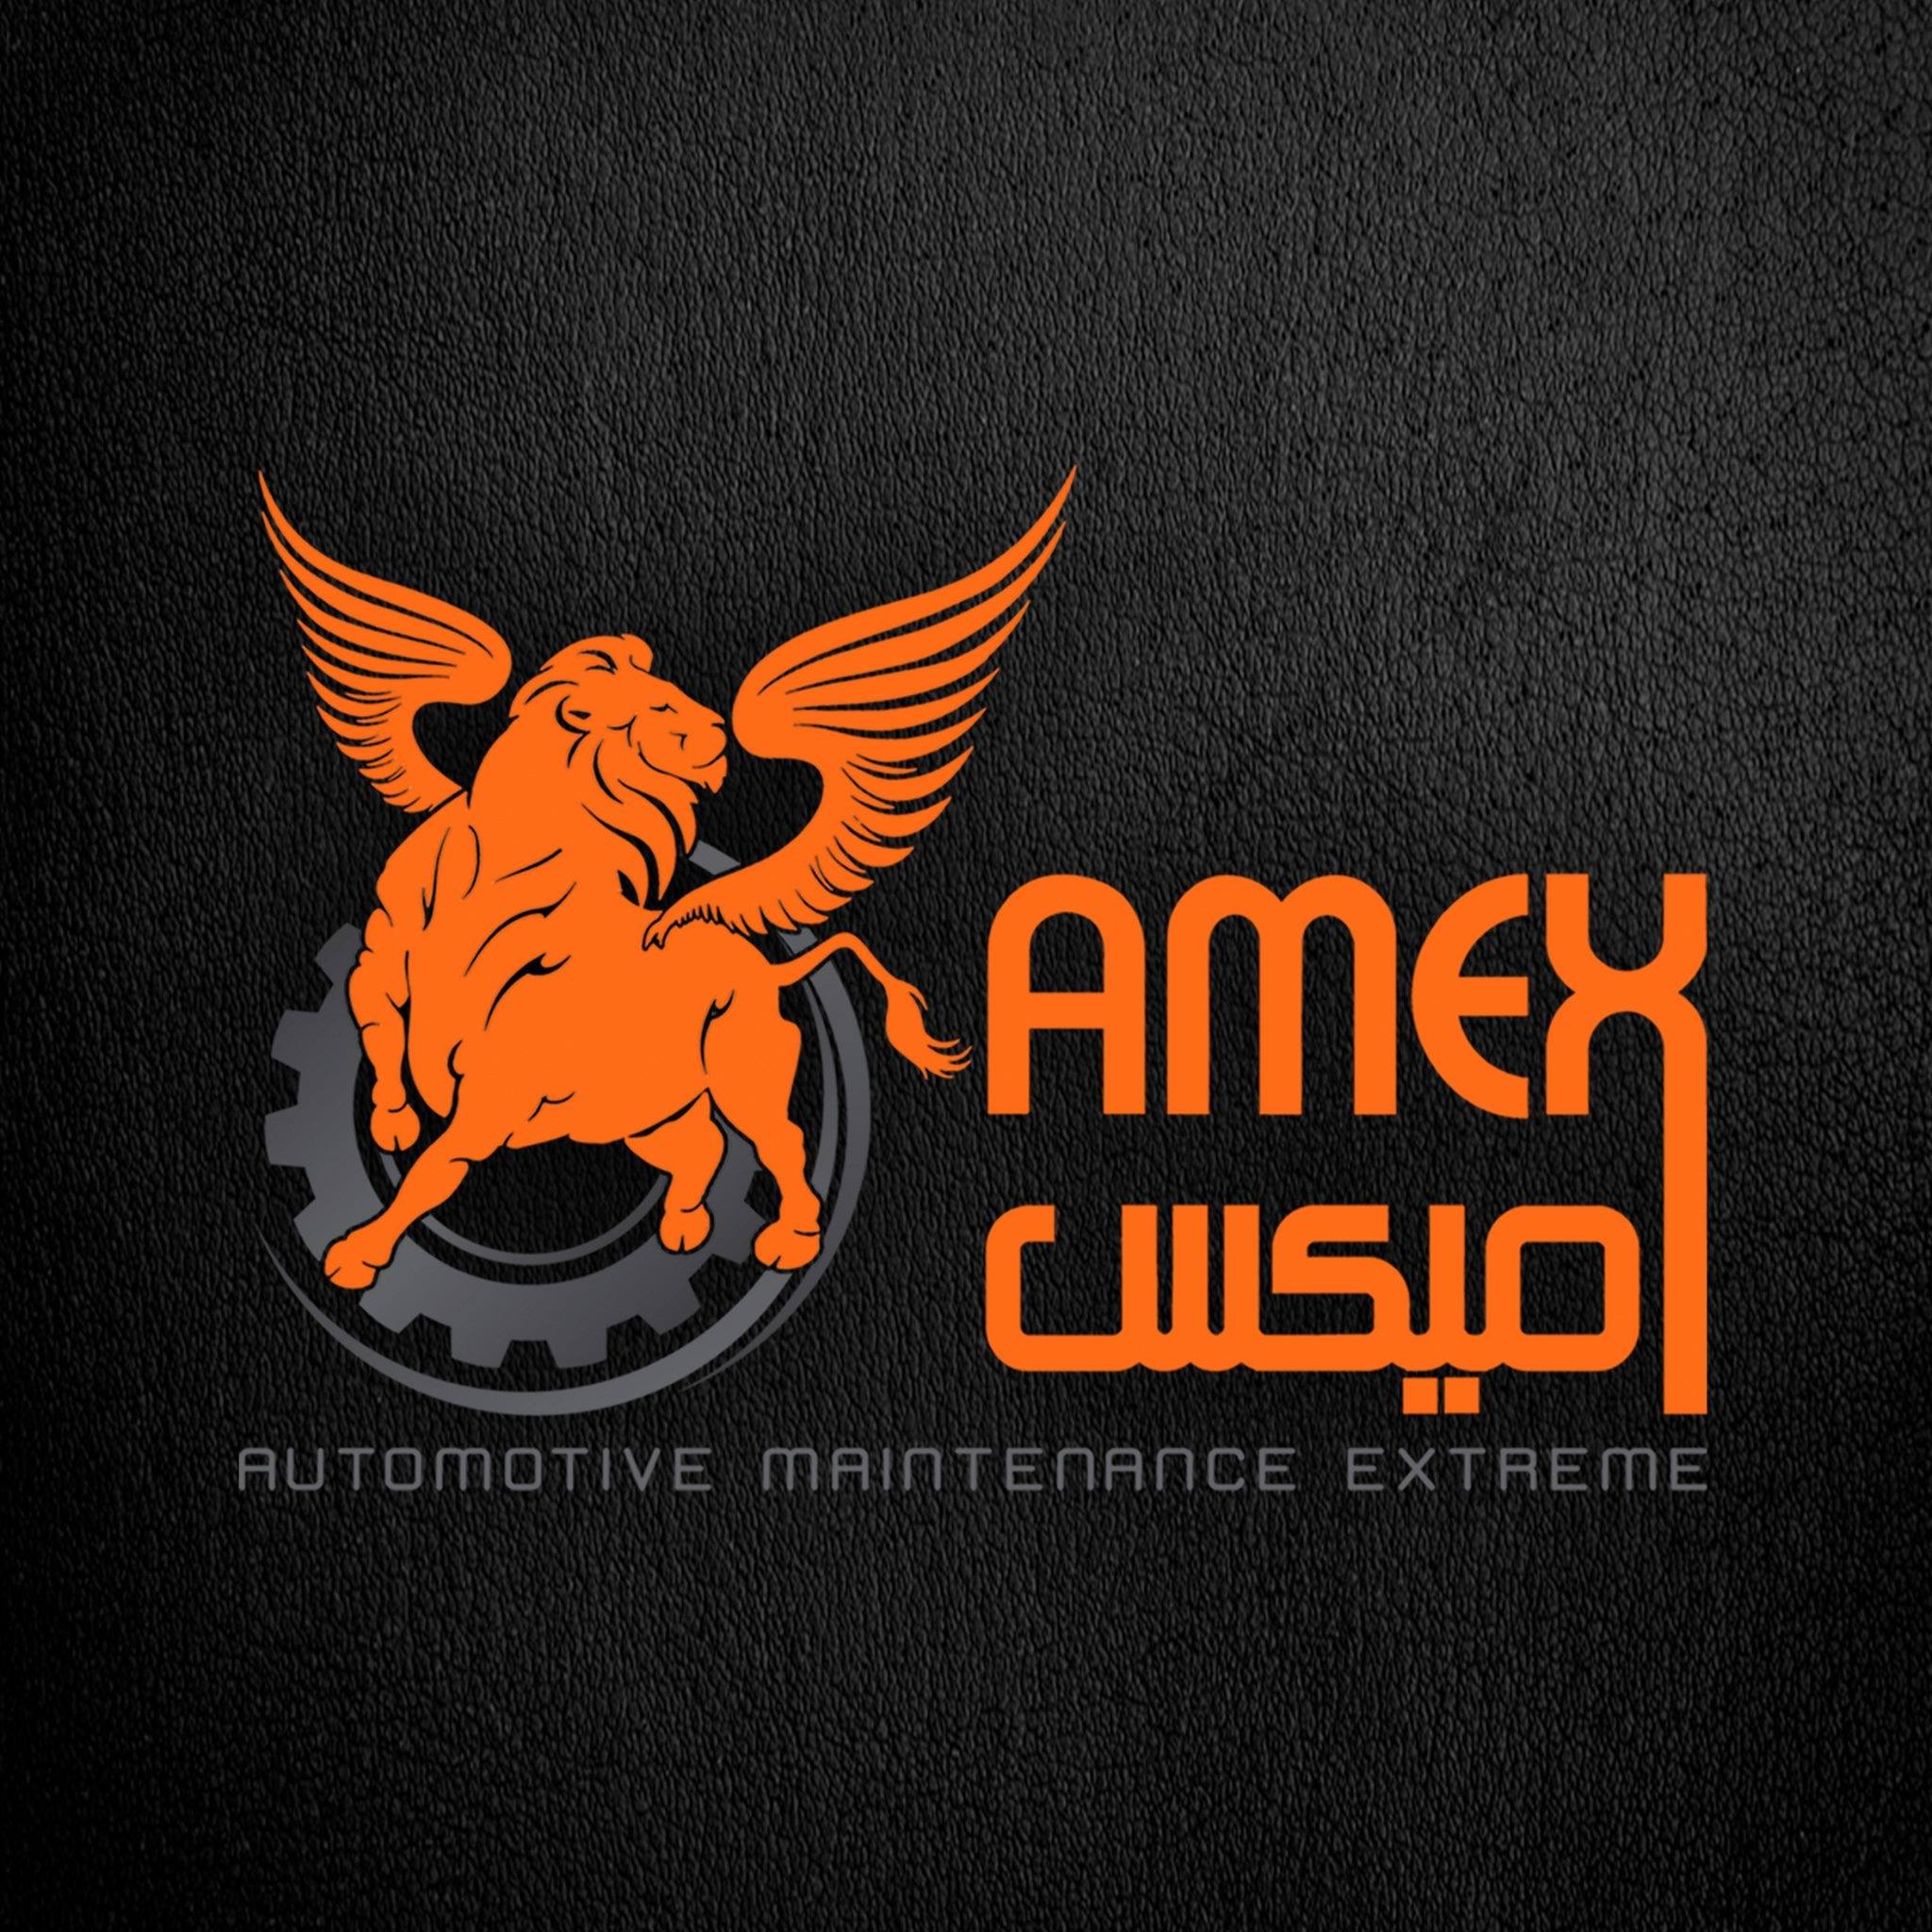 AMEX Automotive Maintenance